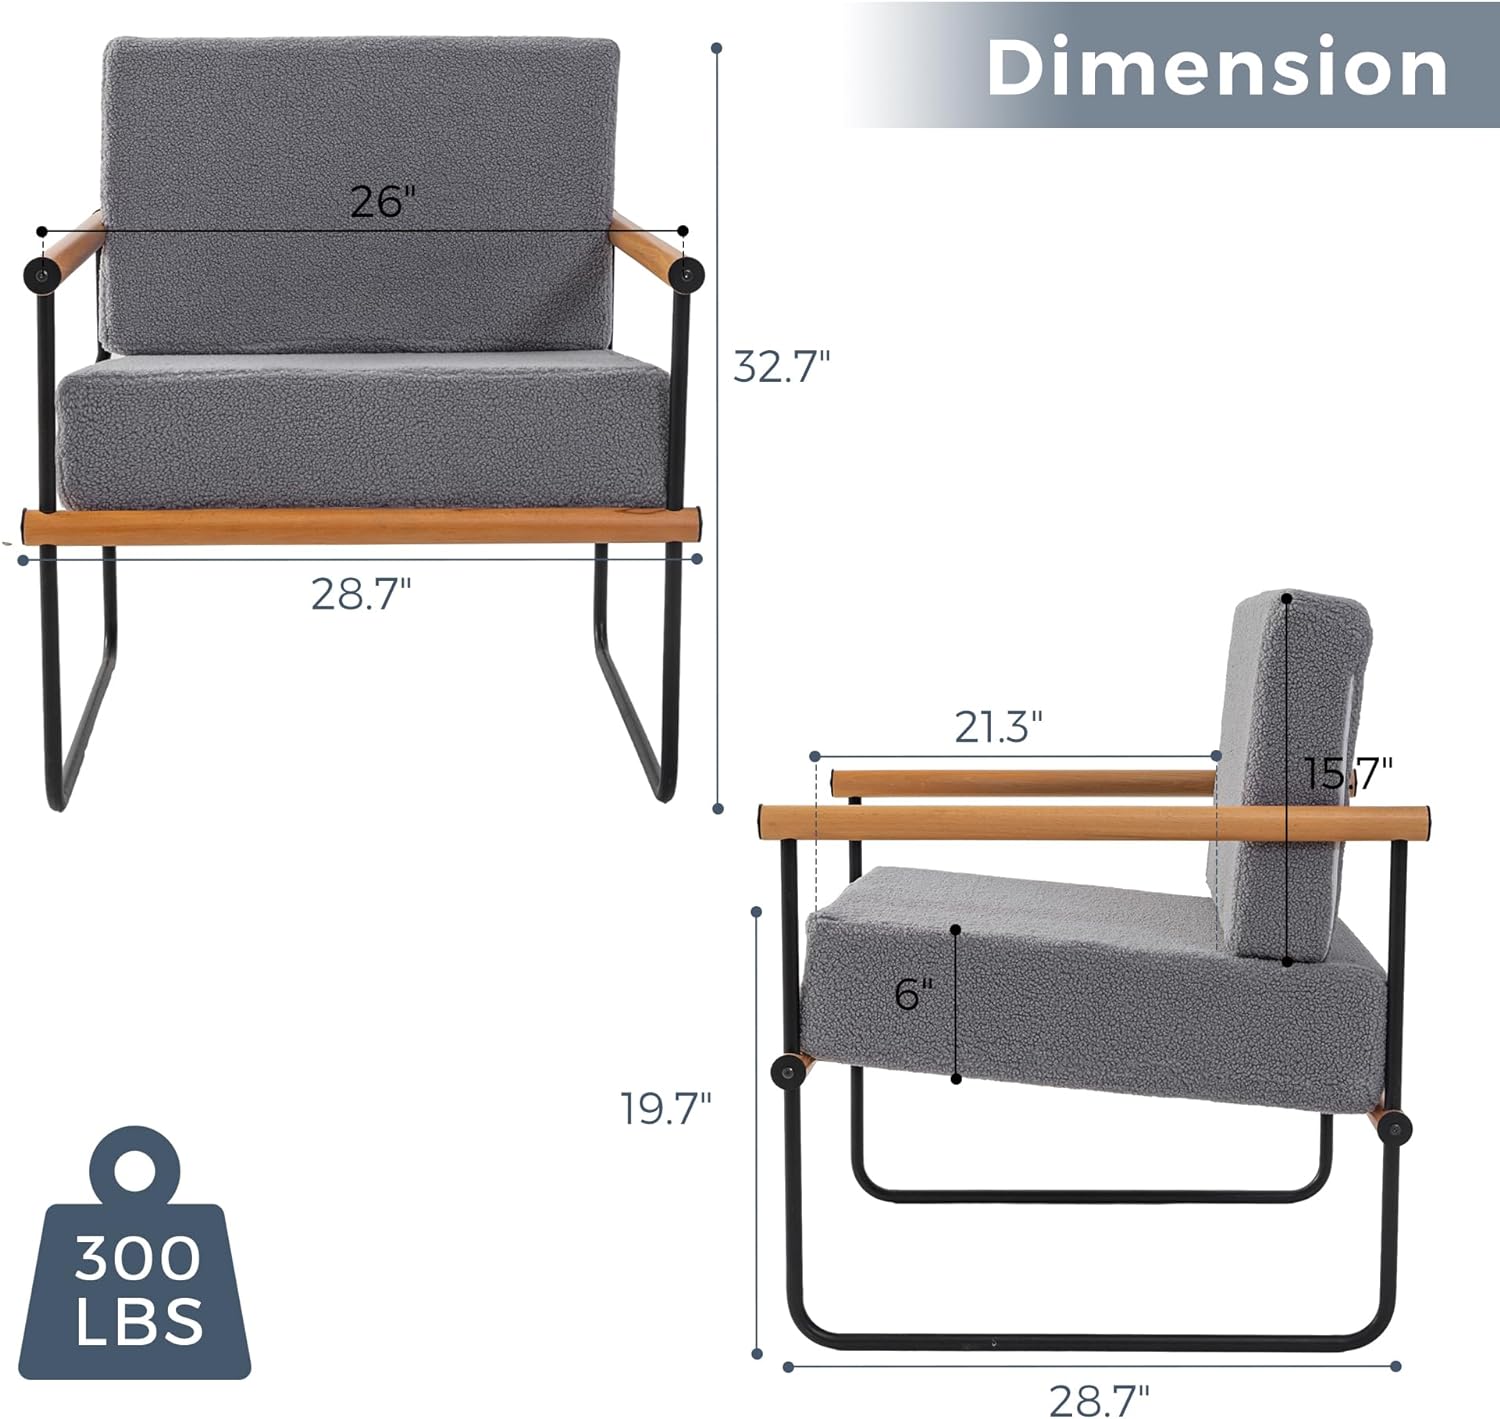 MAXYOYO Minimalist Armchair dimensions